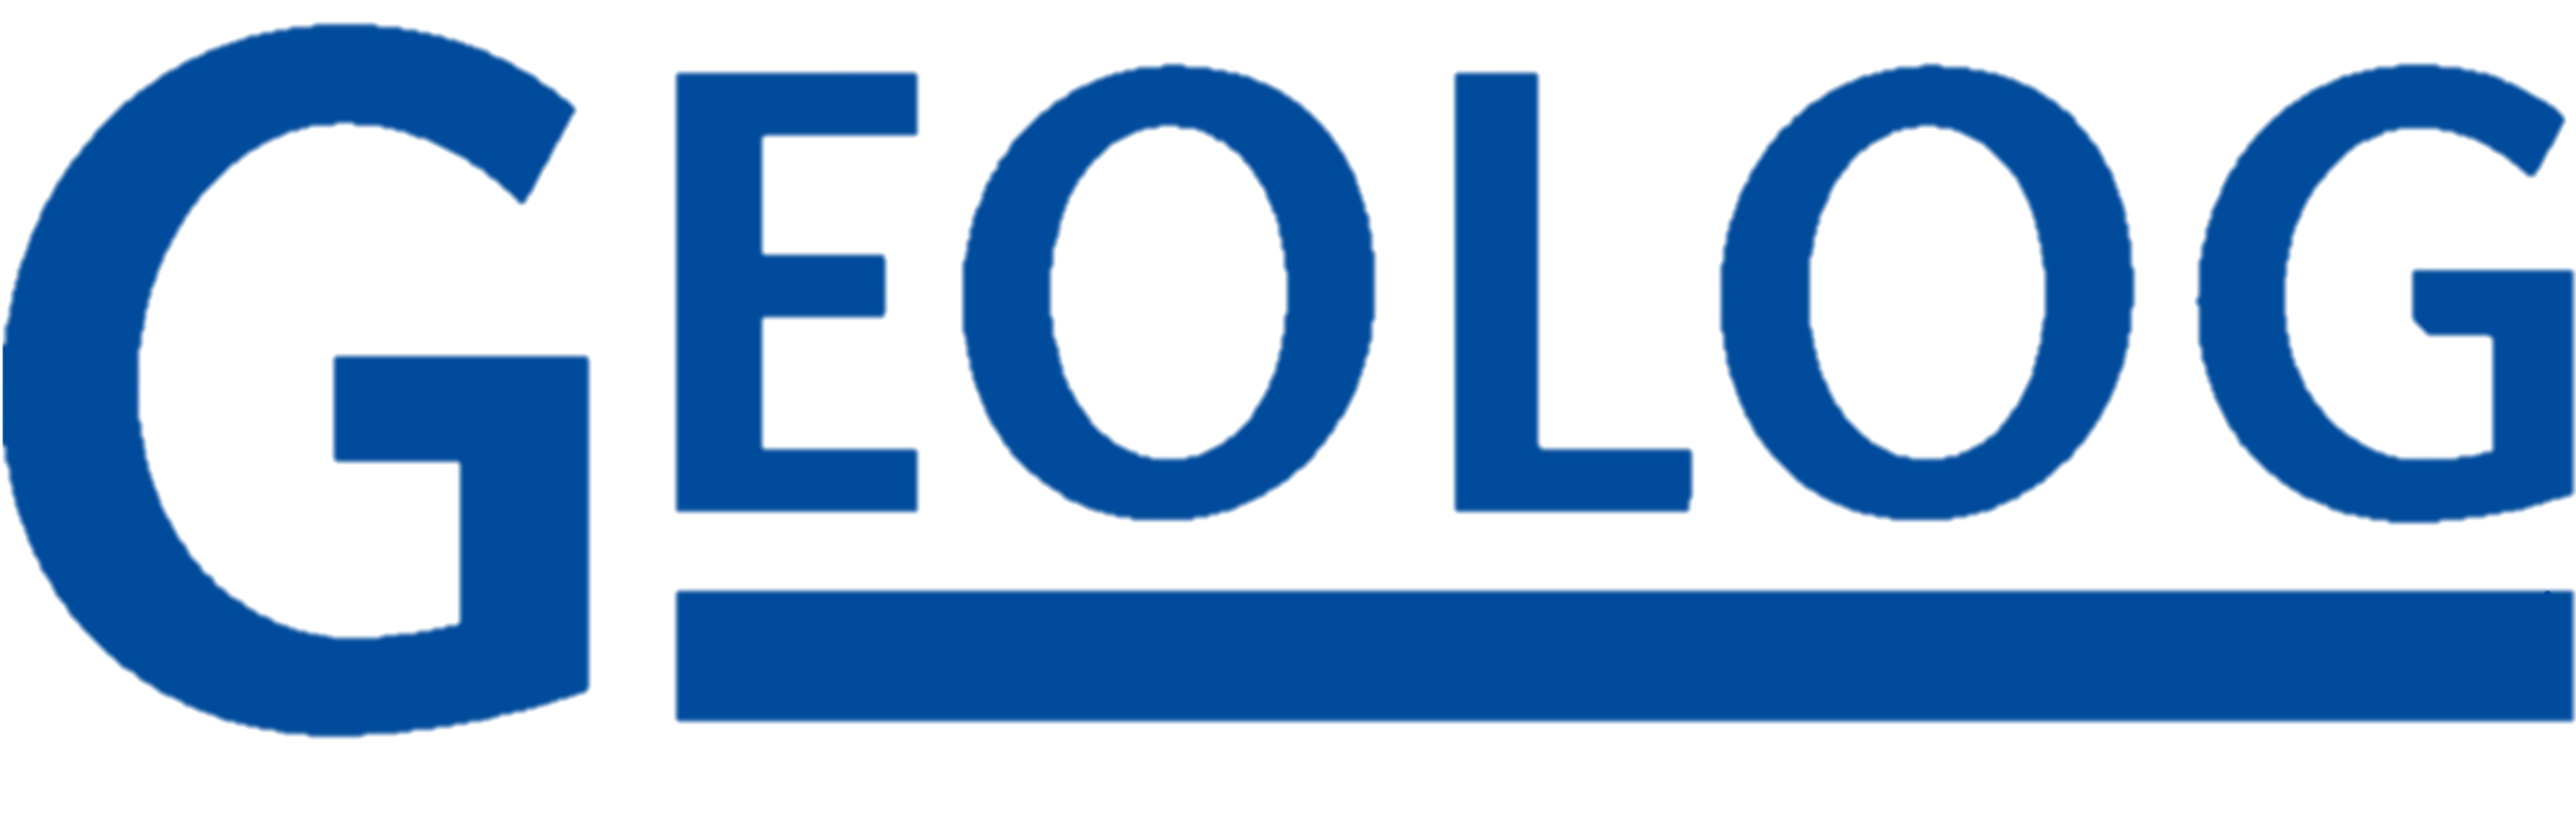 geolog logo